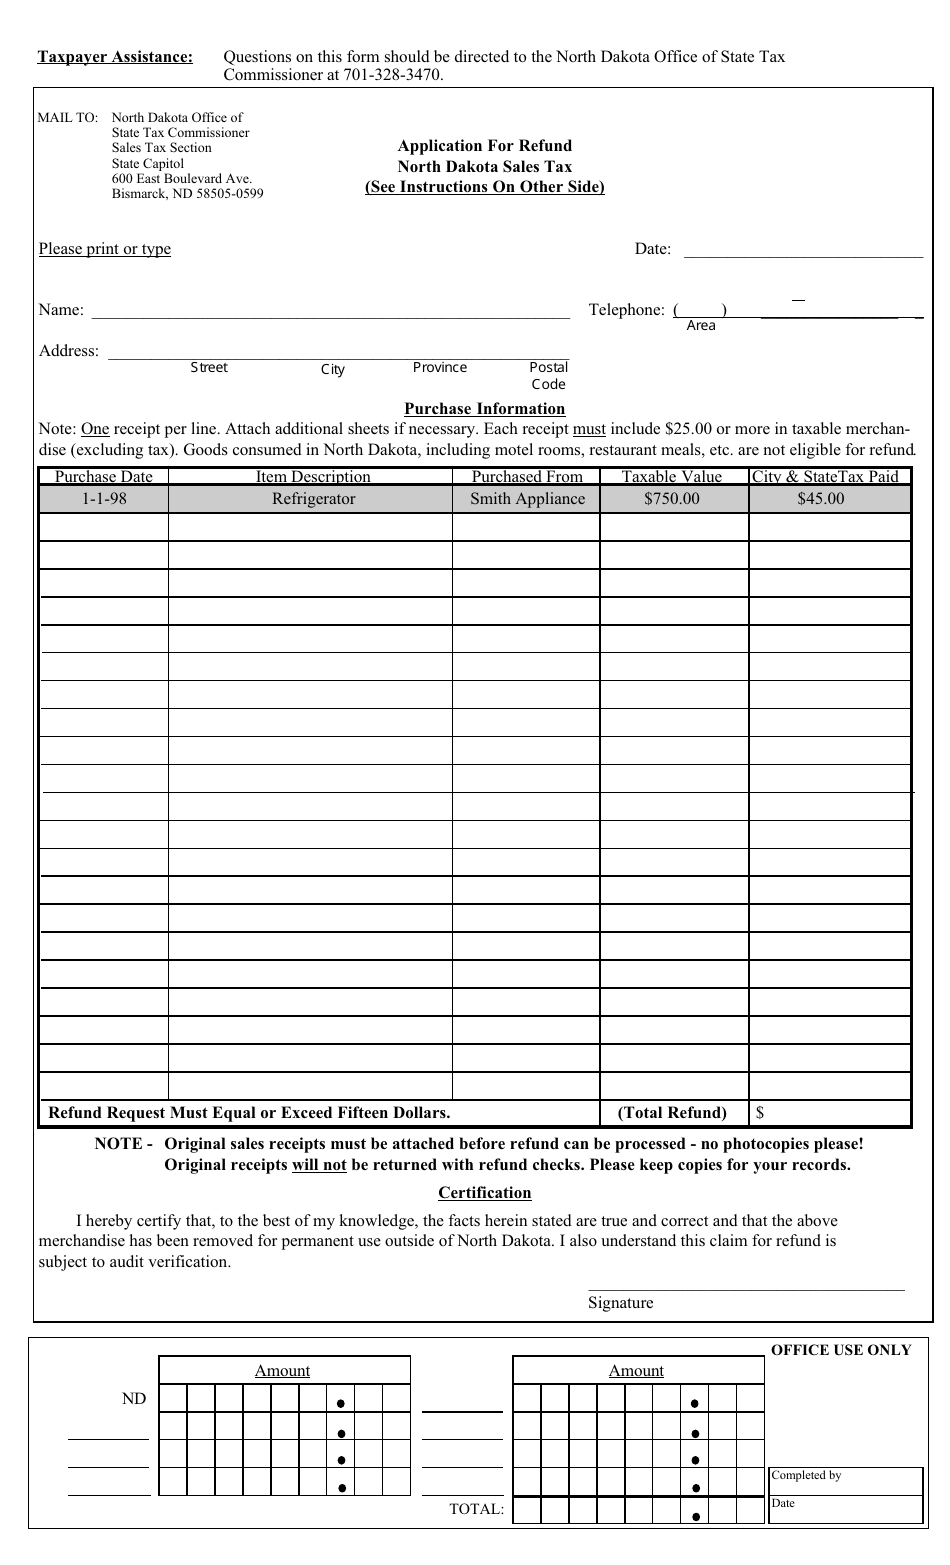 Application Form for Refund - North Dakota, Page 1